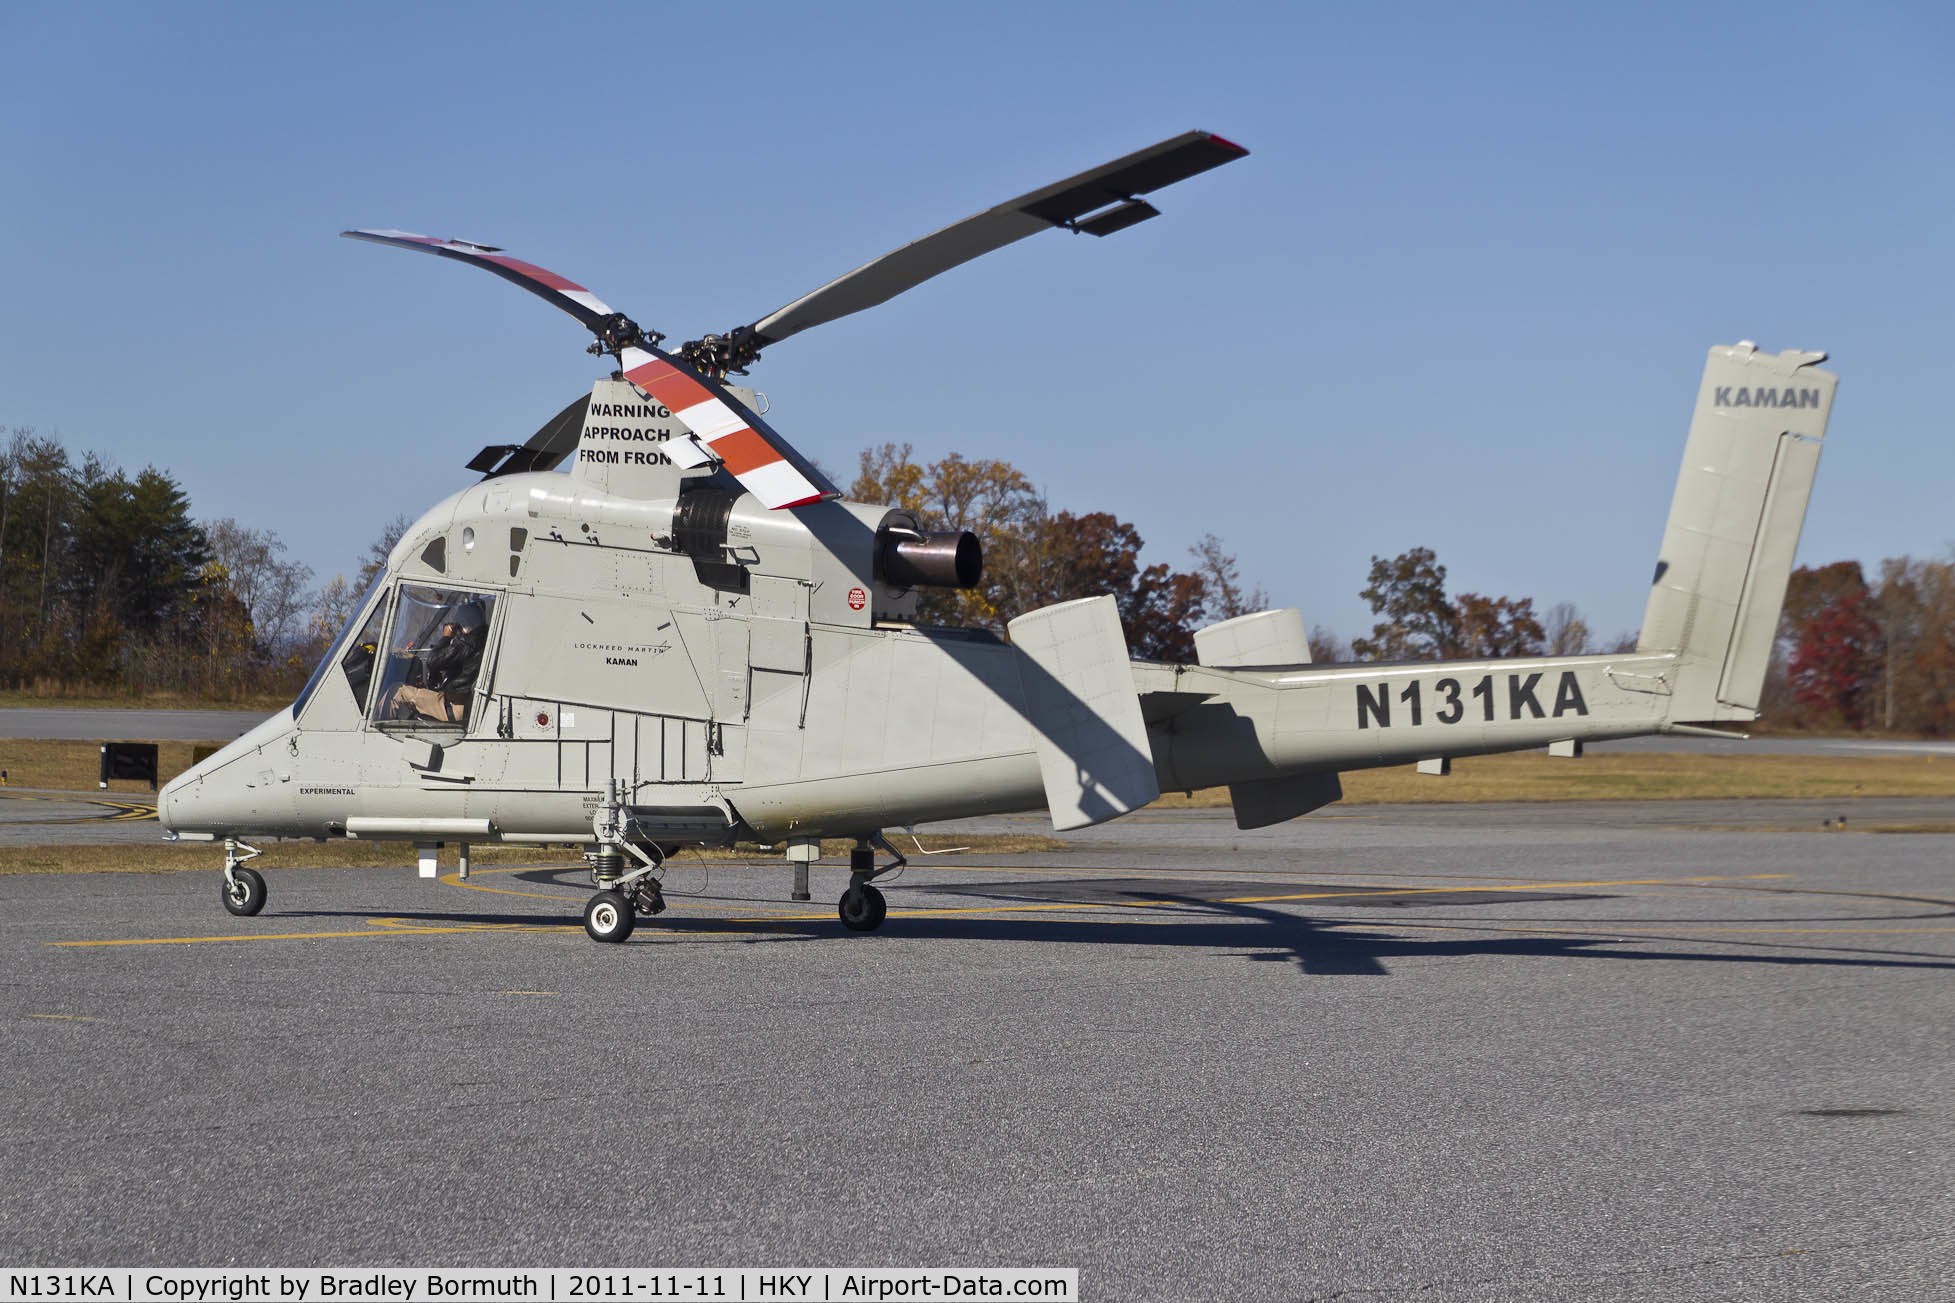 N131KA, 1993 Kaman K-1200 C/N A94-0002, Kaman helicopter fueled up in Hickory.